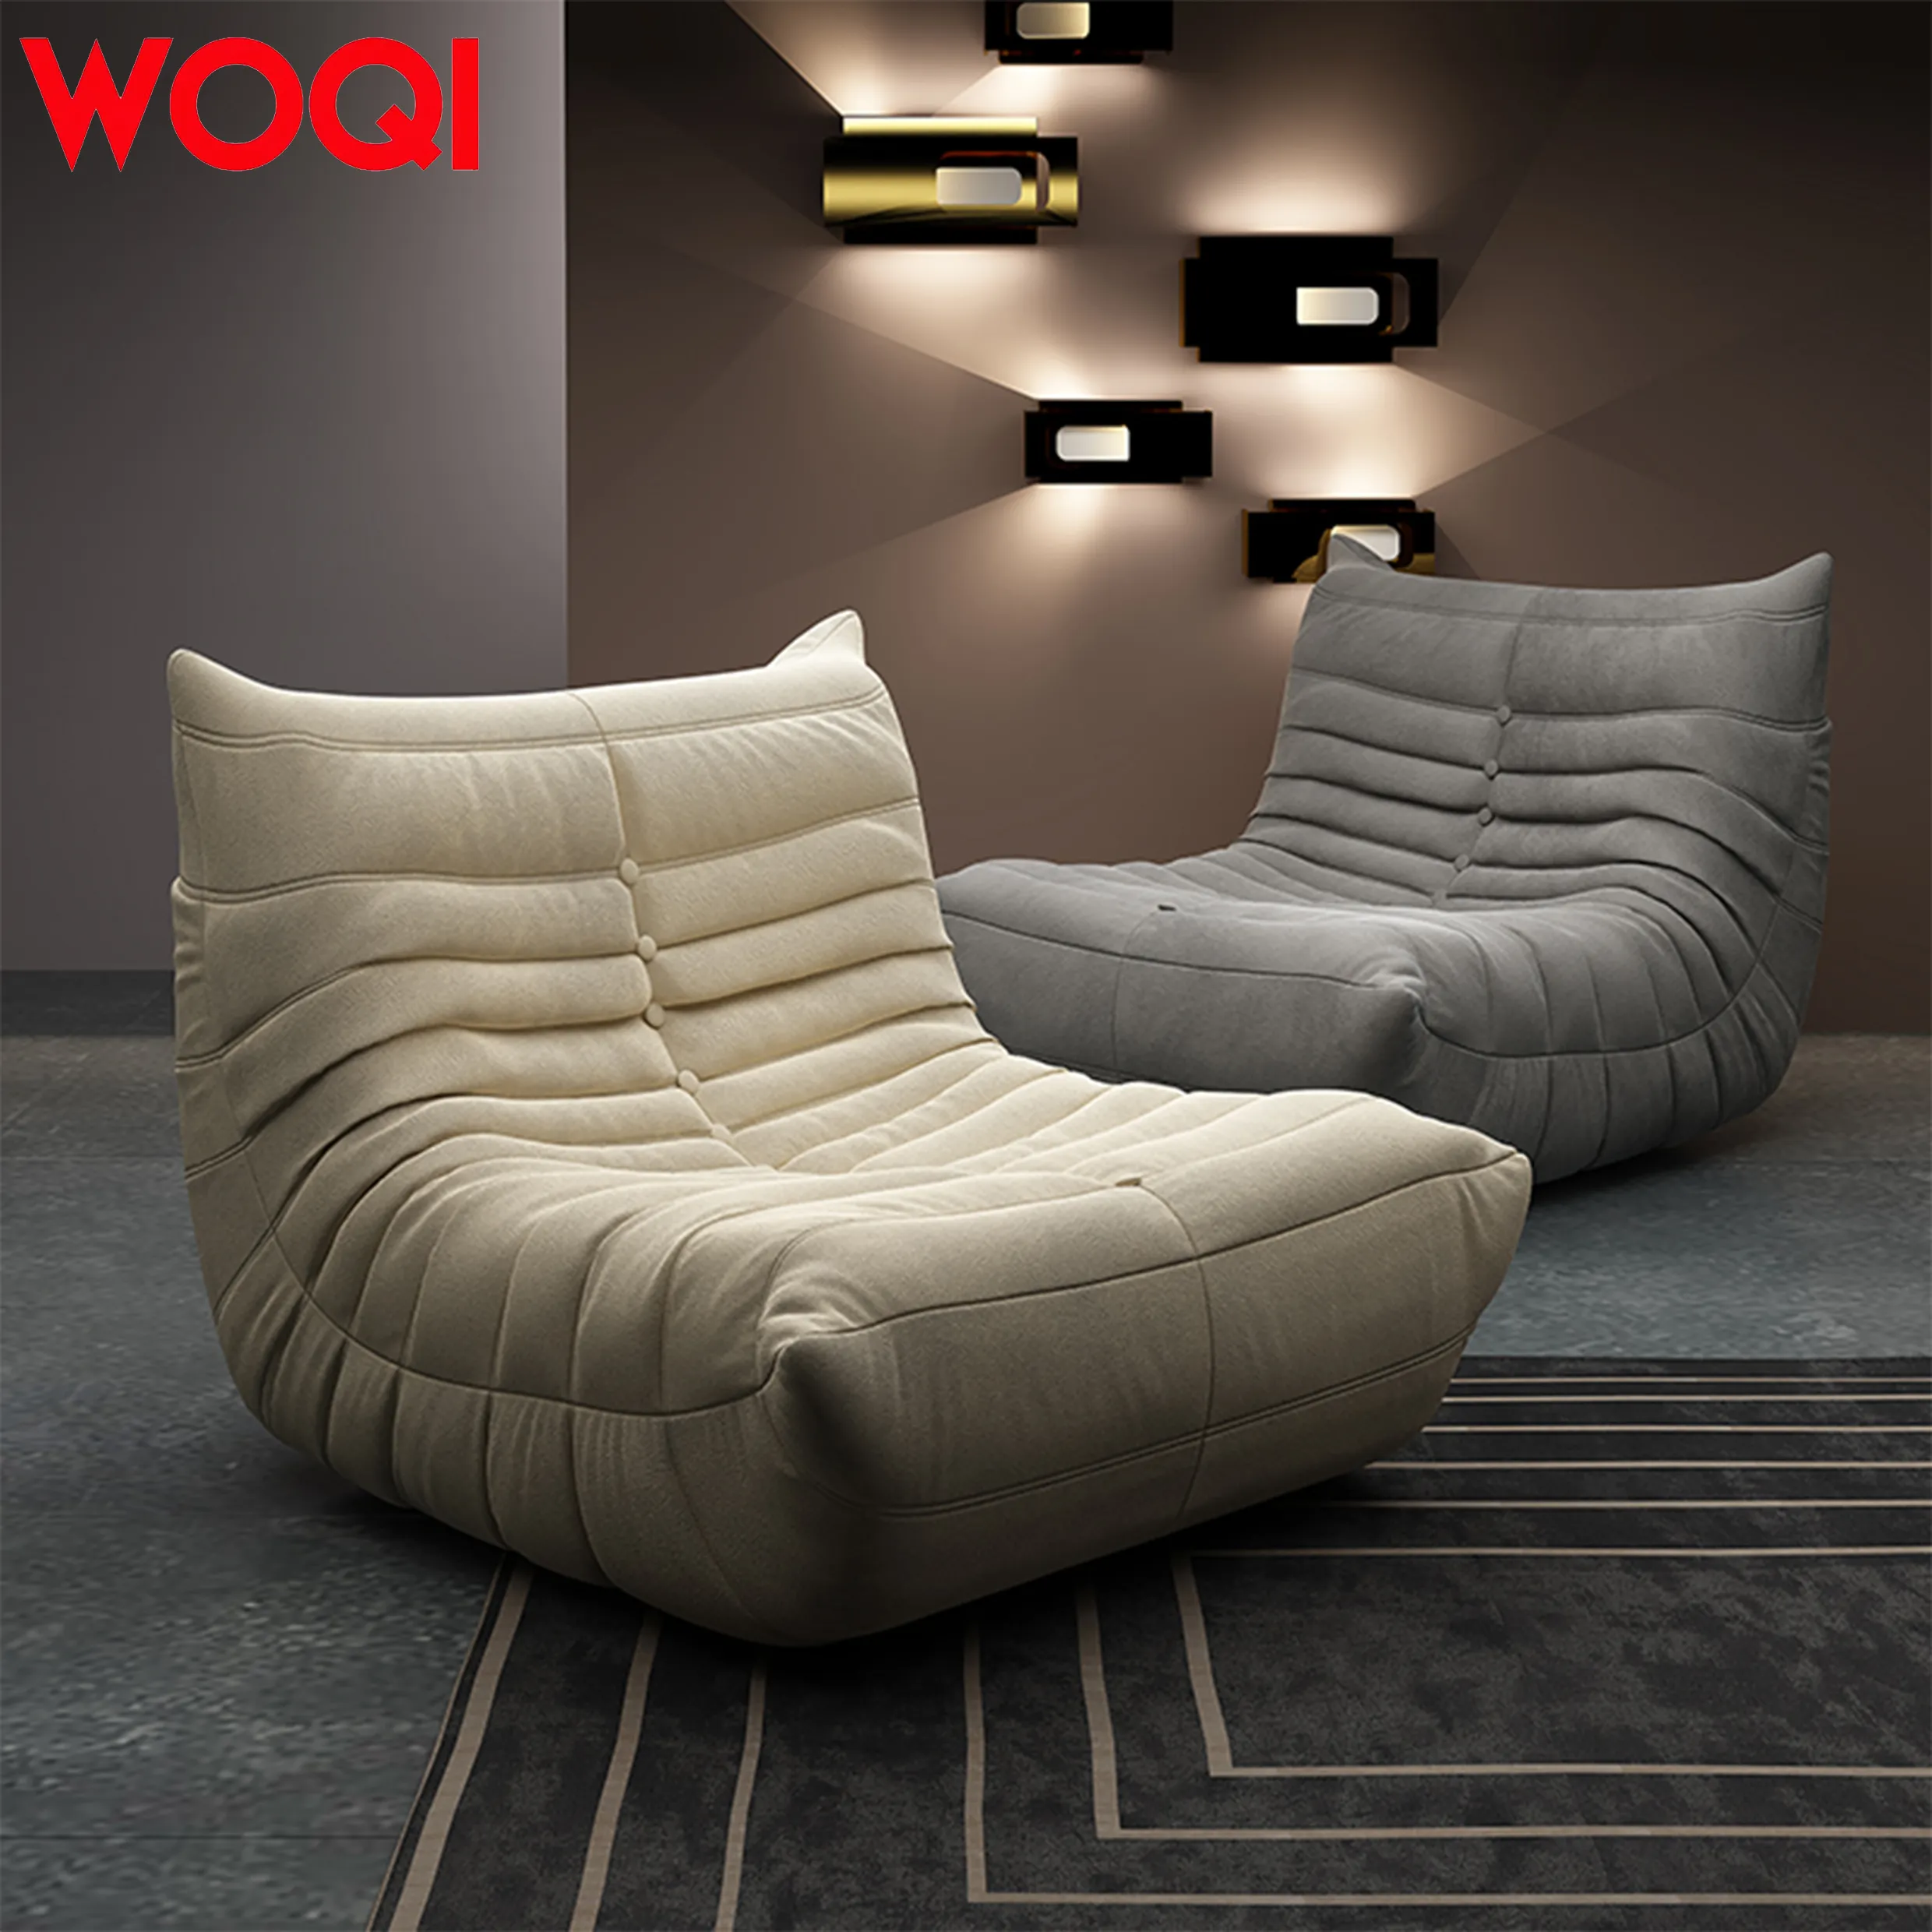 WOQI living room bag chair  inflatable sofa chair